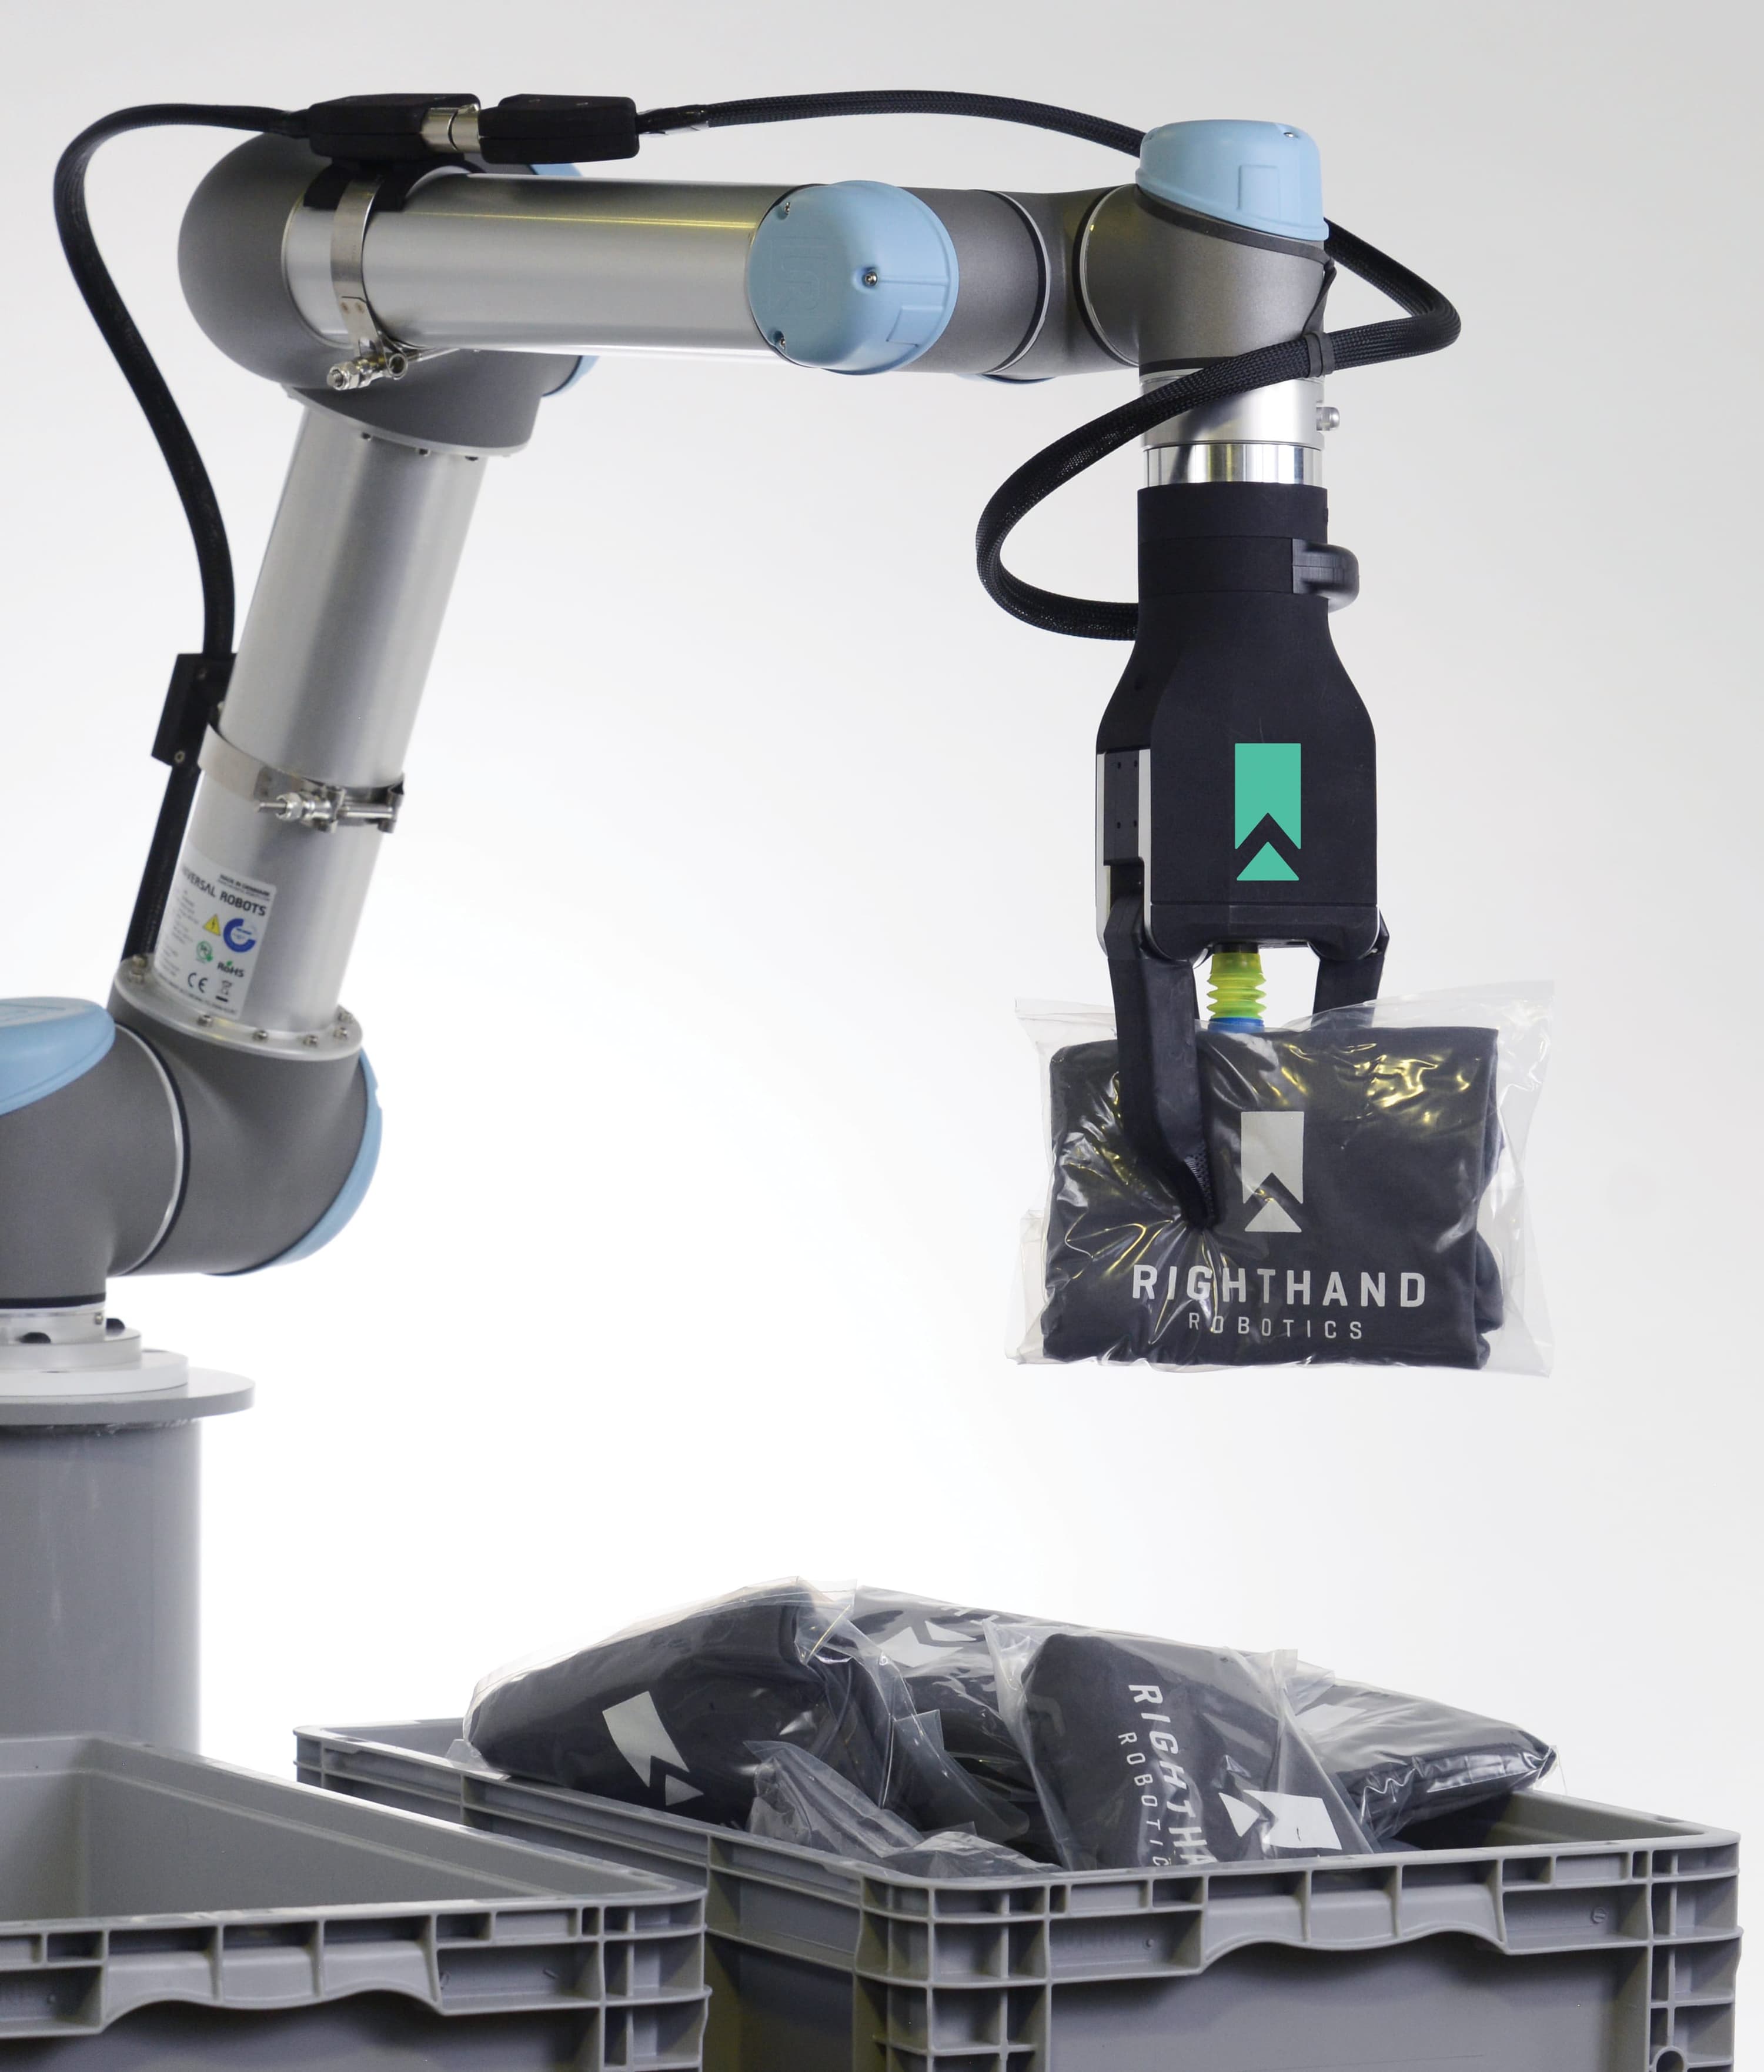 The Latest Article: Righthand robotics raises $23 million in series b funding